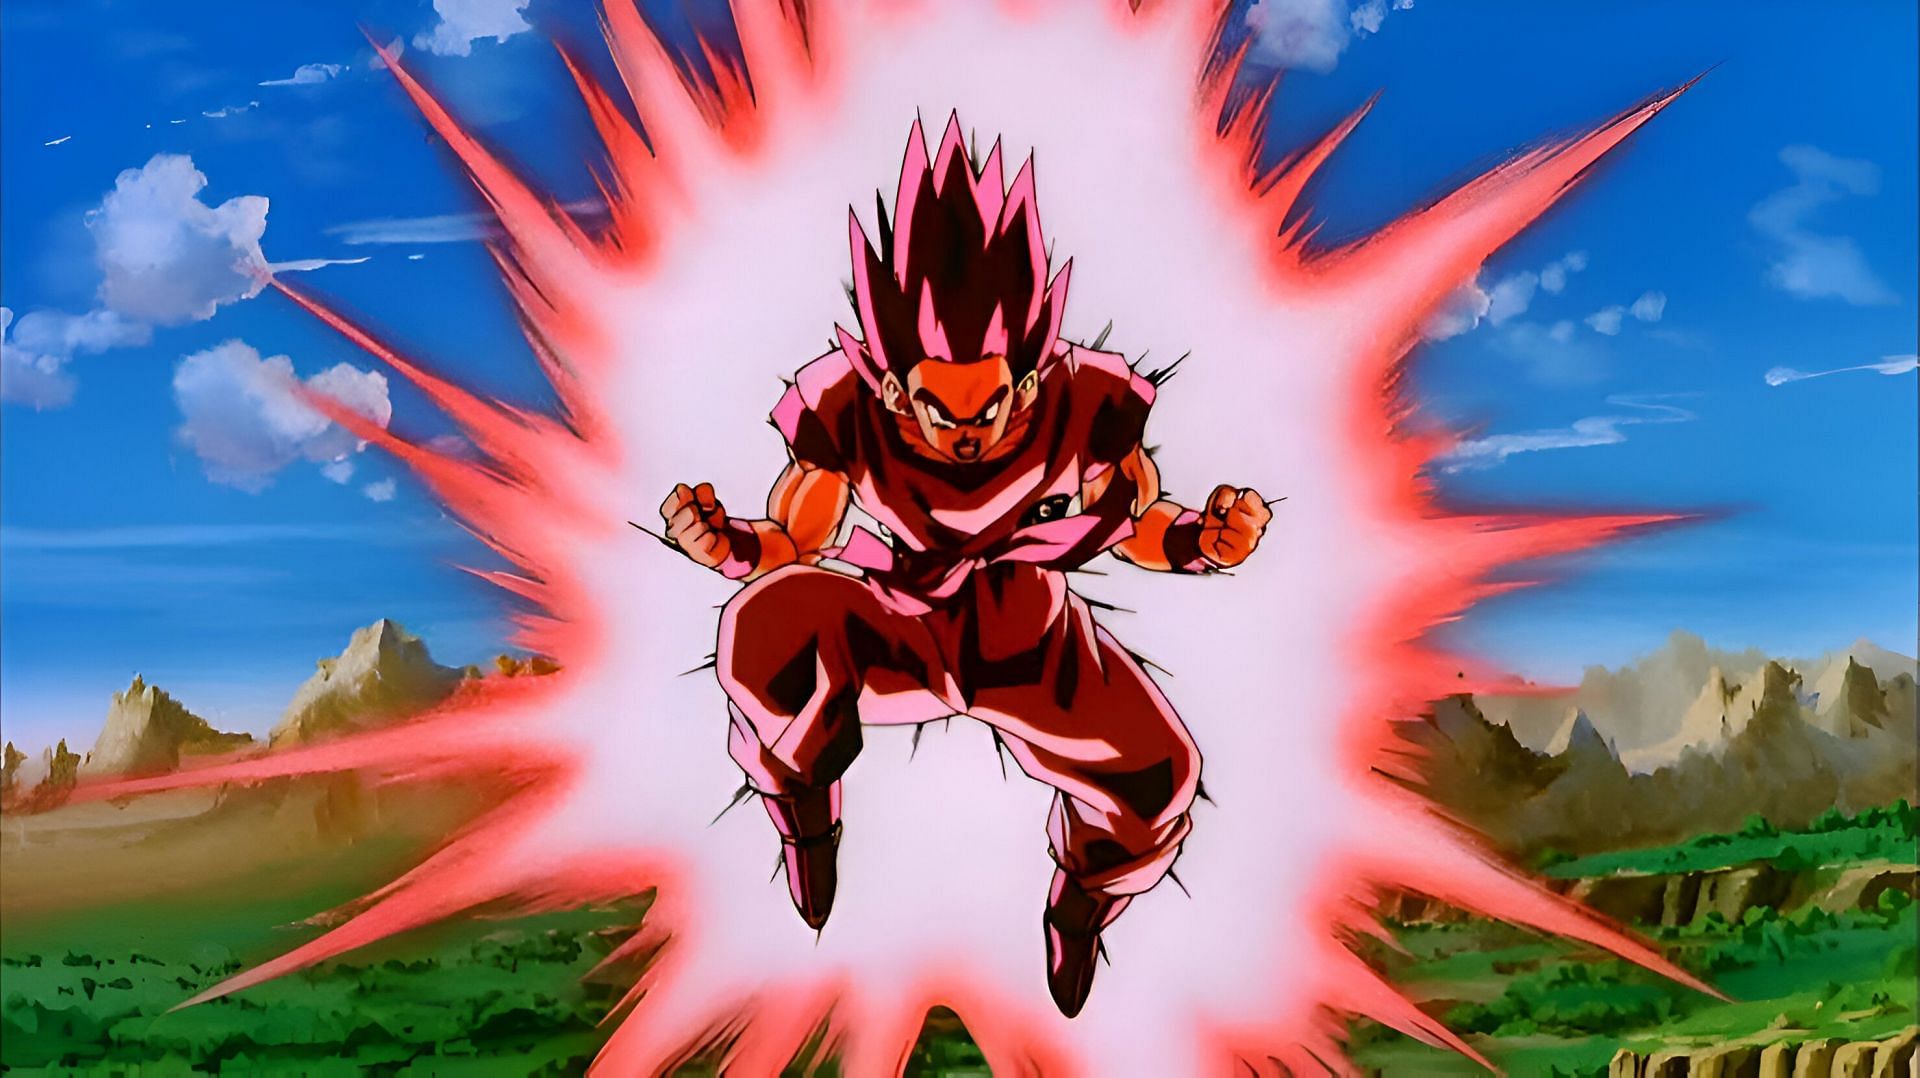 Goku in his Kaio-ken form (Image via Toei Animation)